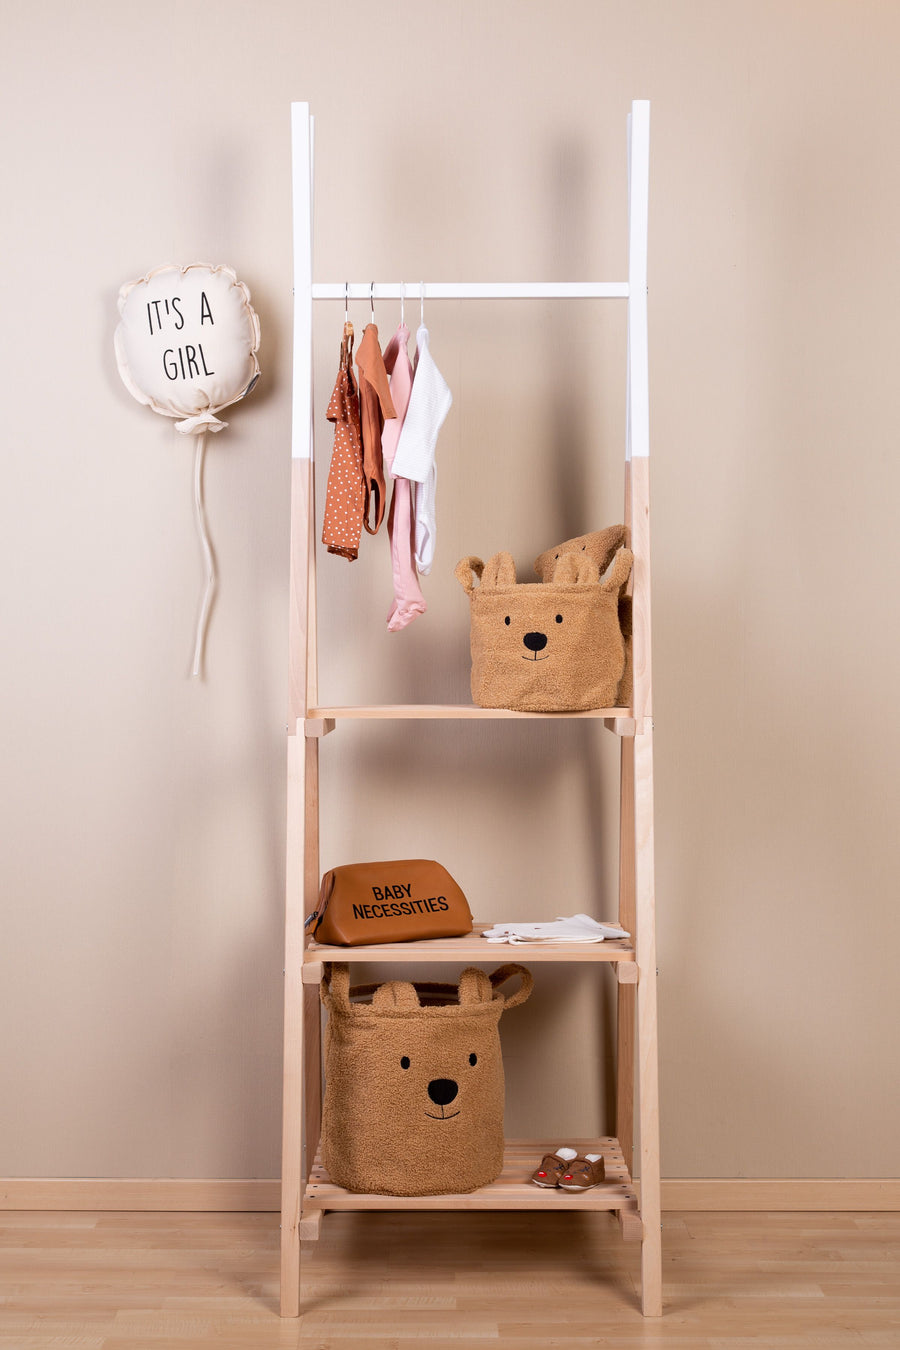 Brown Teddy storage basket Small - Childhome